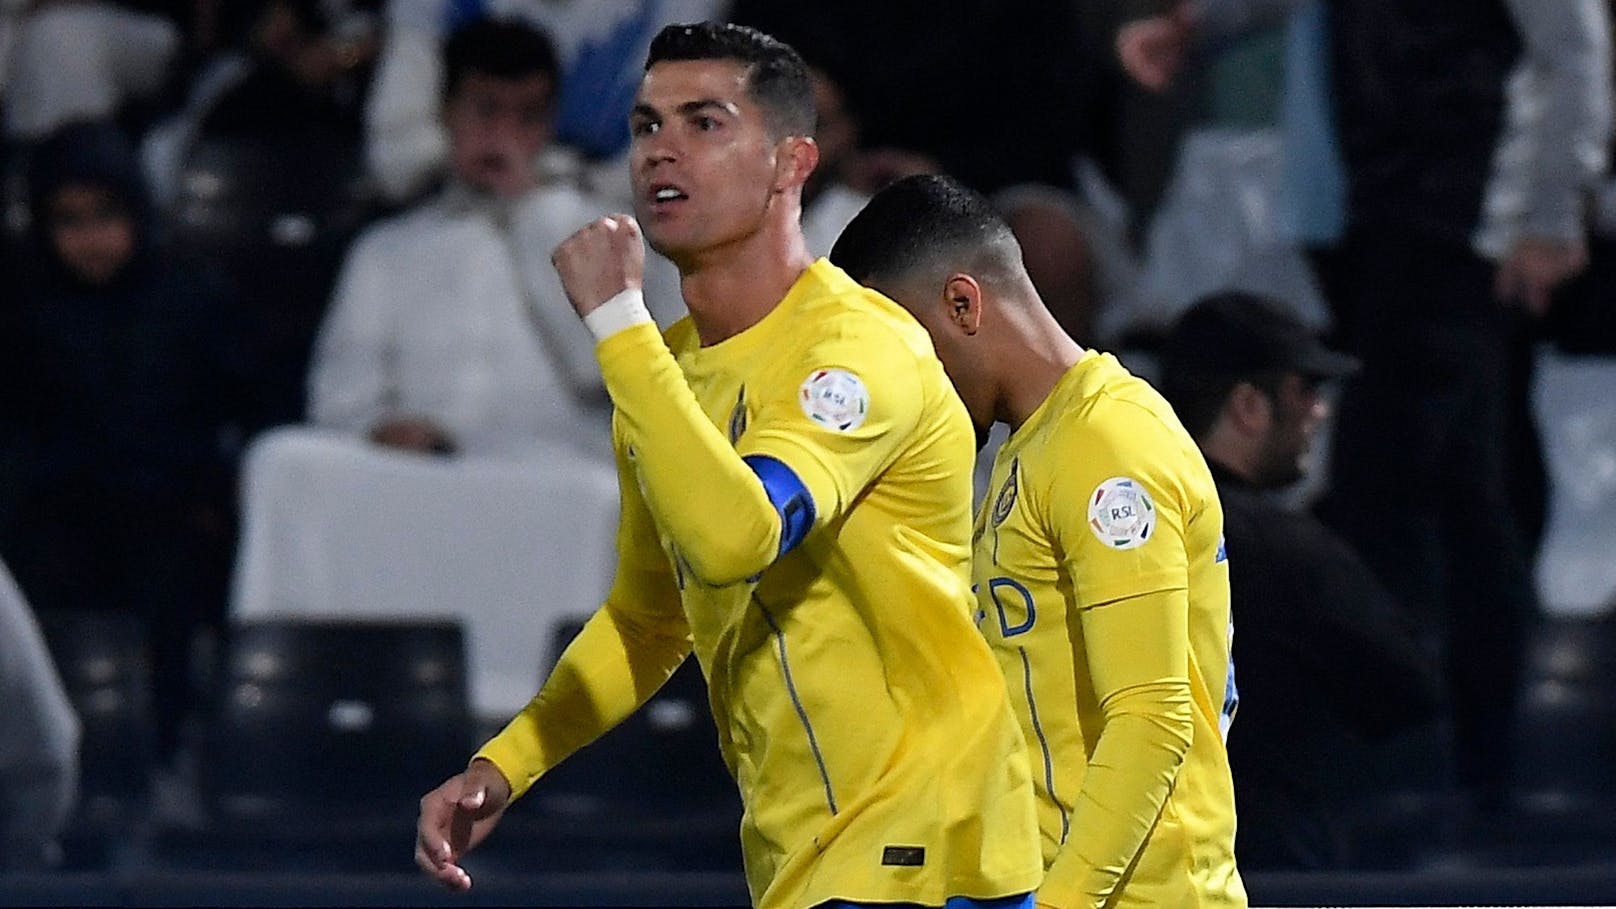 Kuriose Ronaldo-Ausrede nach obszöner Geste